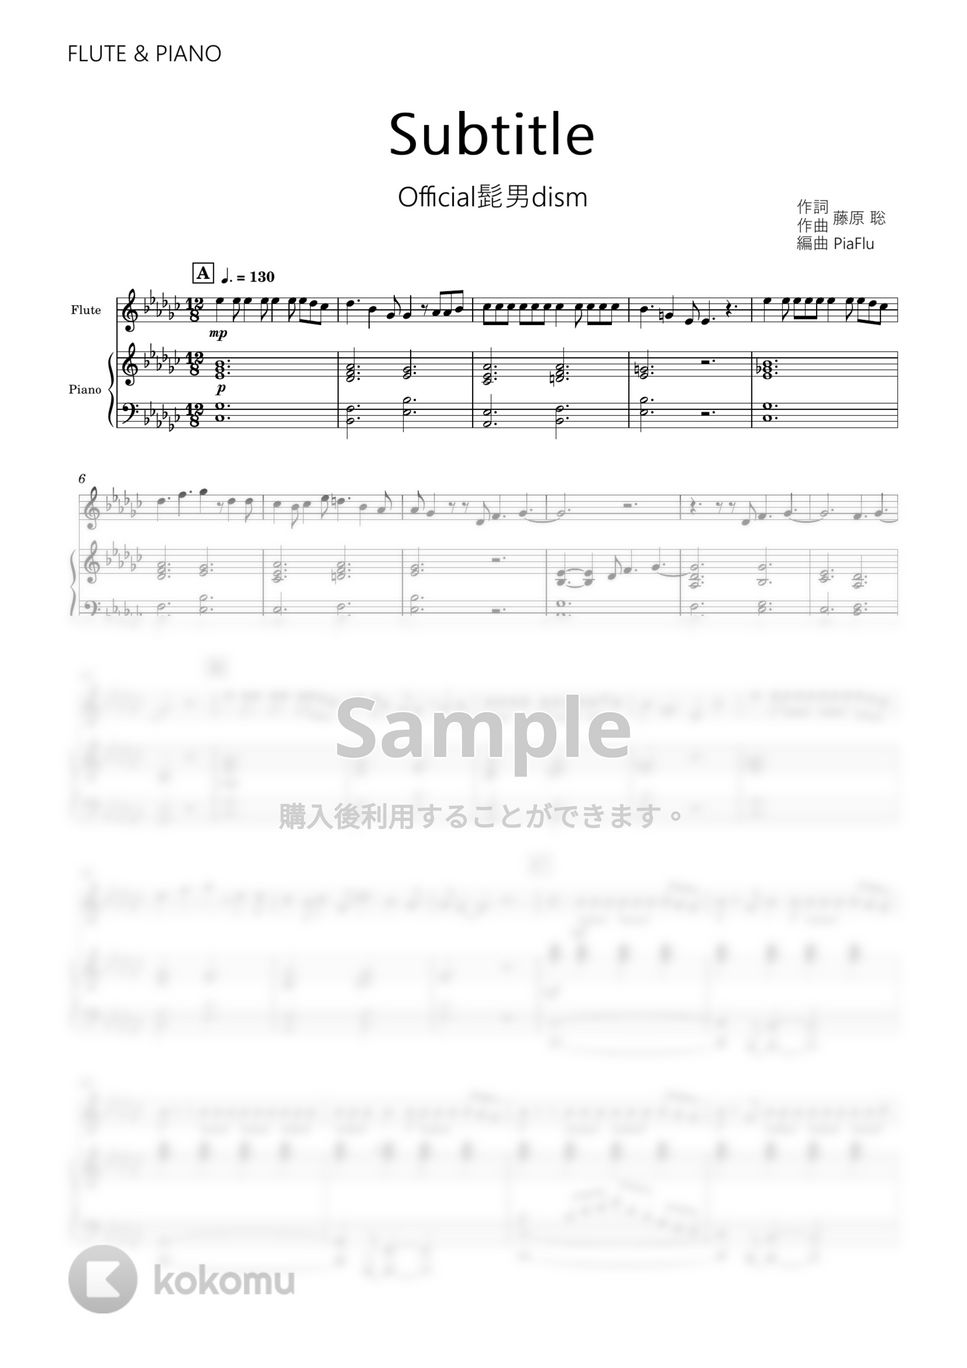 Official髭男dism - Subtitle (フルート&ピアノ伴奏) by PiaFlu